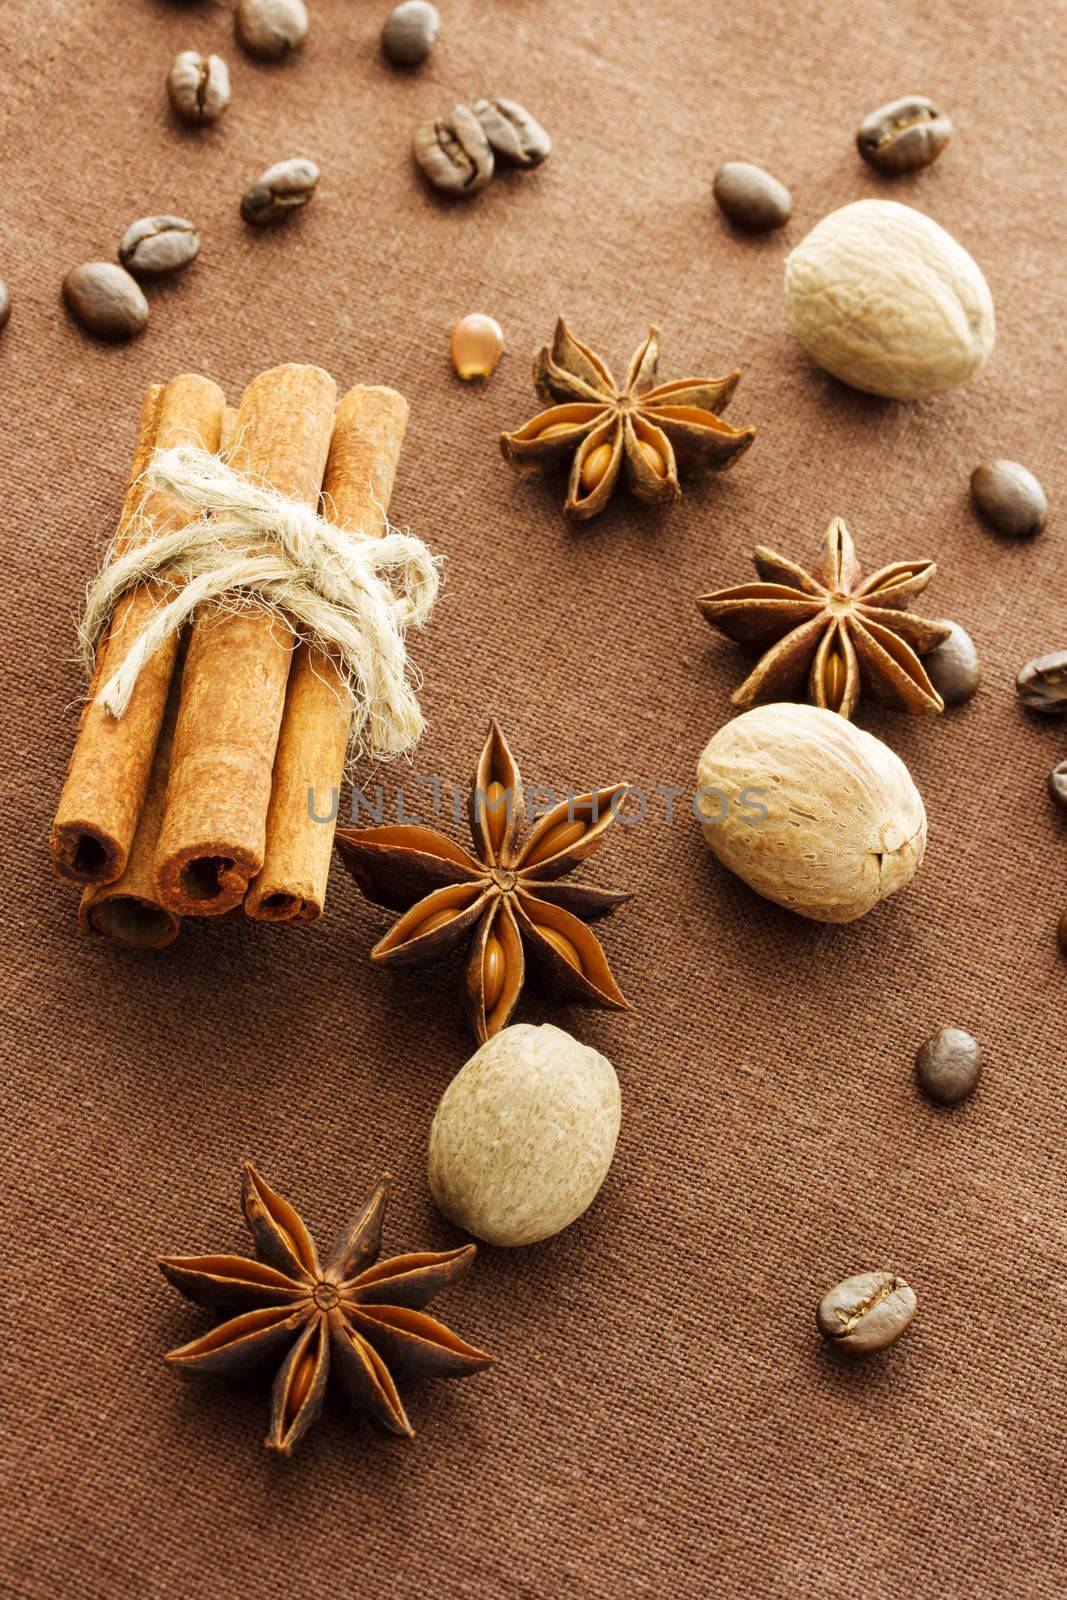 Star anise, cinnamon sticks, nutmeg and coffee beans by melpomene